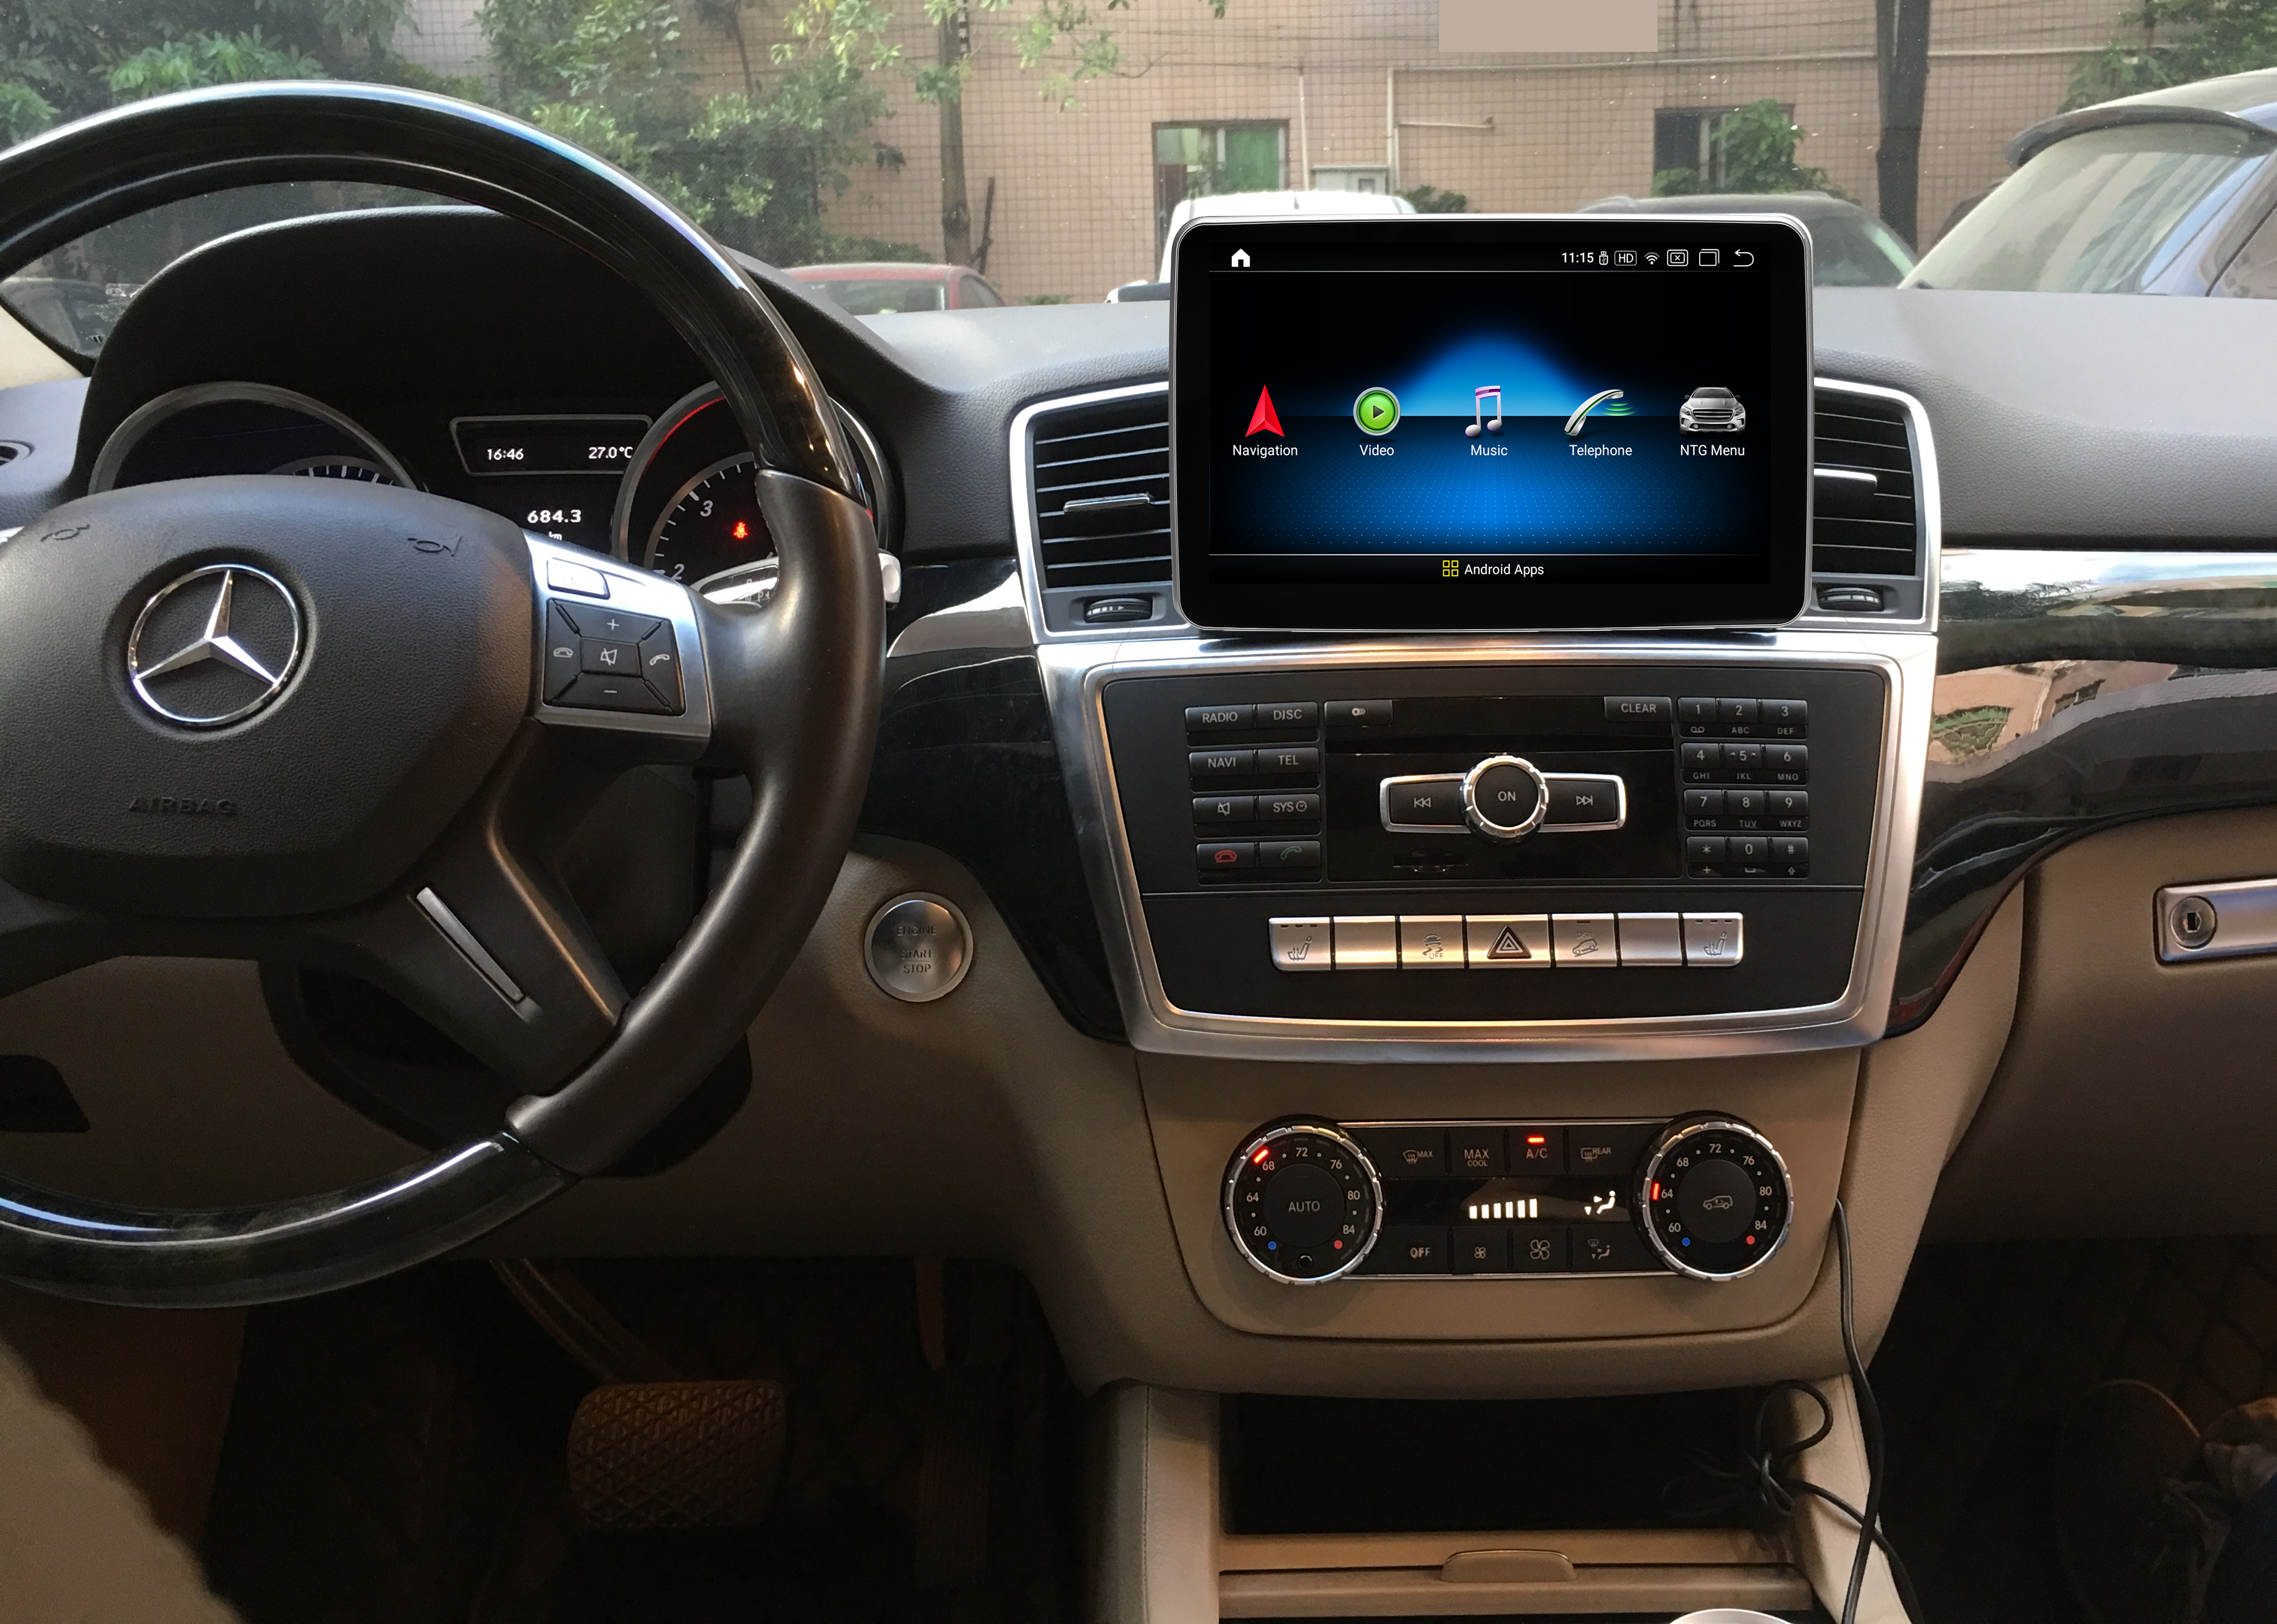 Mercedes Benz ML-Class GLK GLS Android Auto Car DVD Player